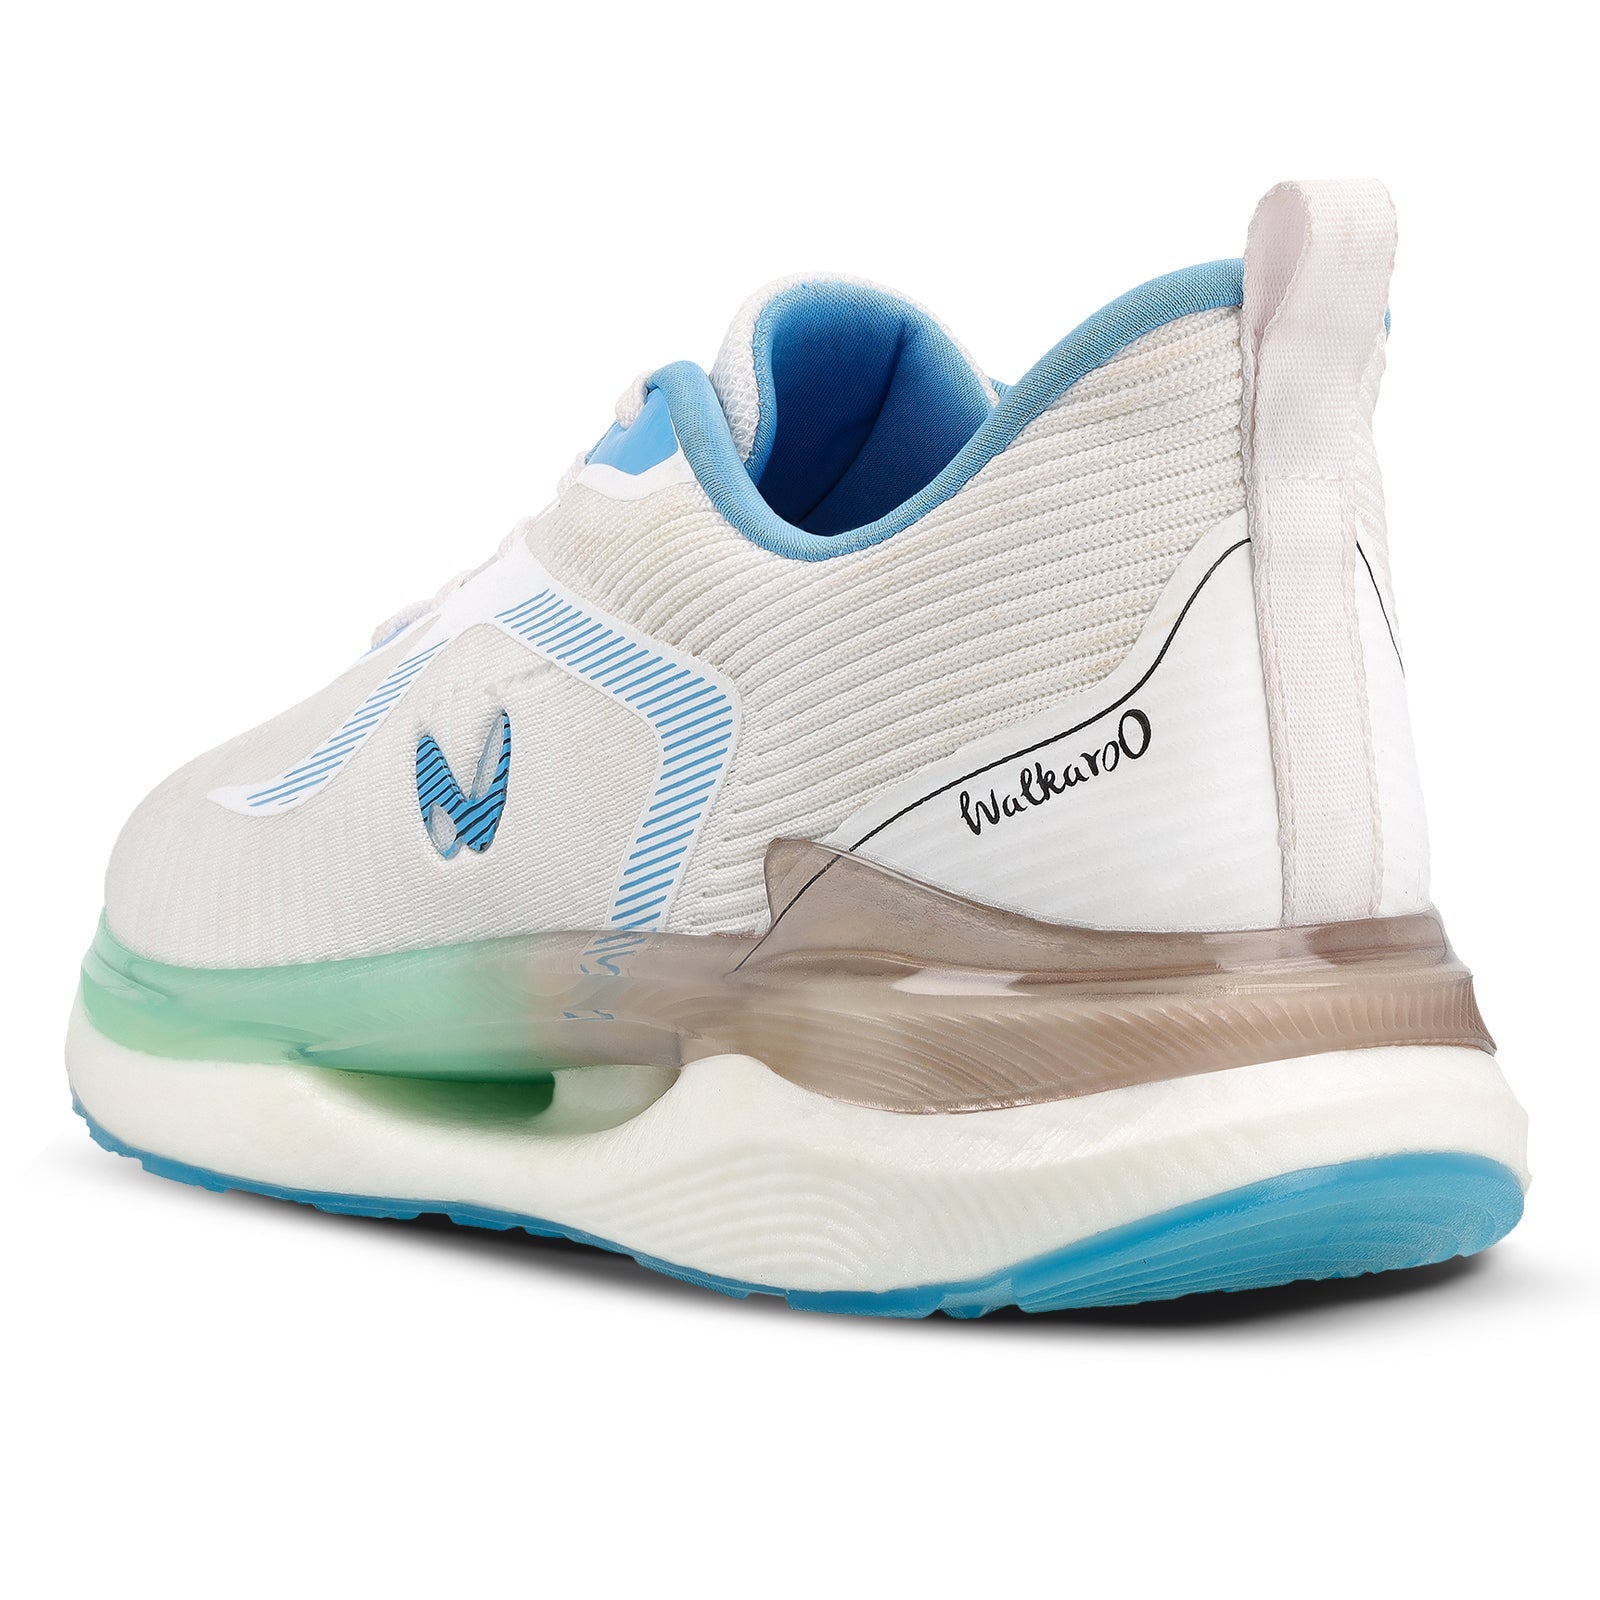 Buy WALKAROO Gents Navy Blue Sports Shoe (WS3050) 9 UK at Amazon.in